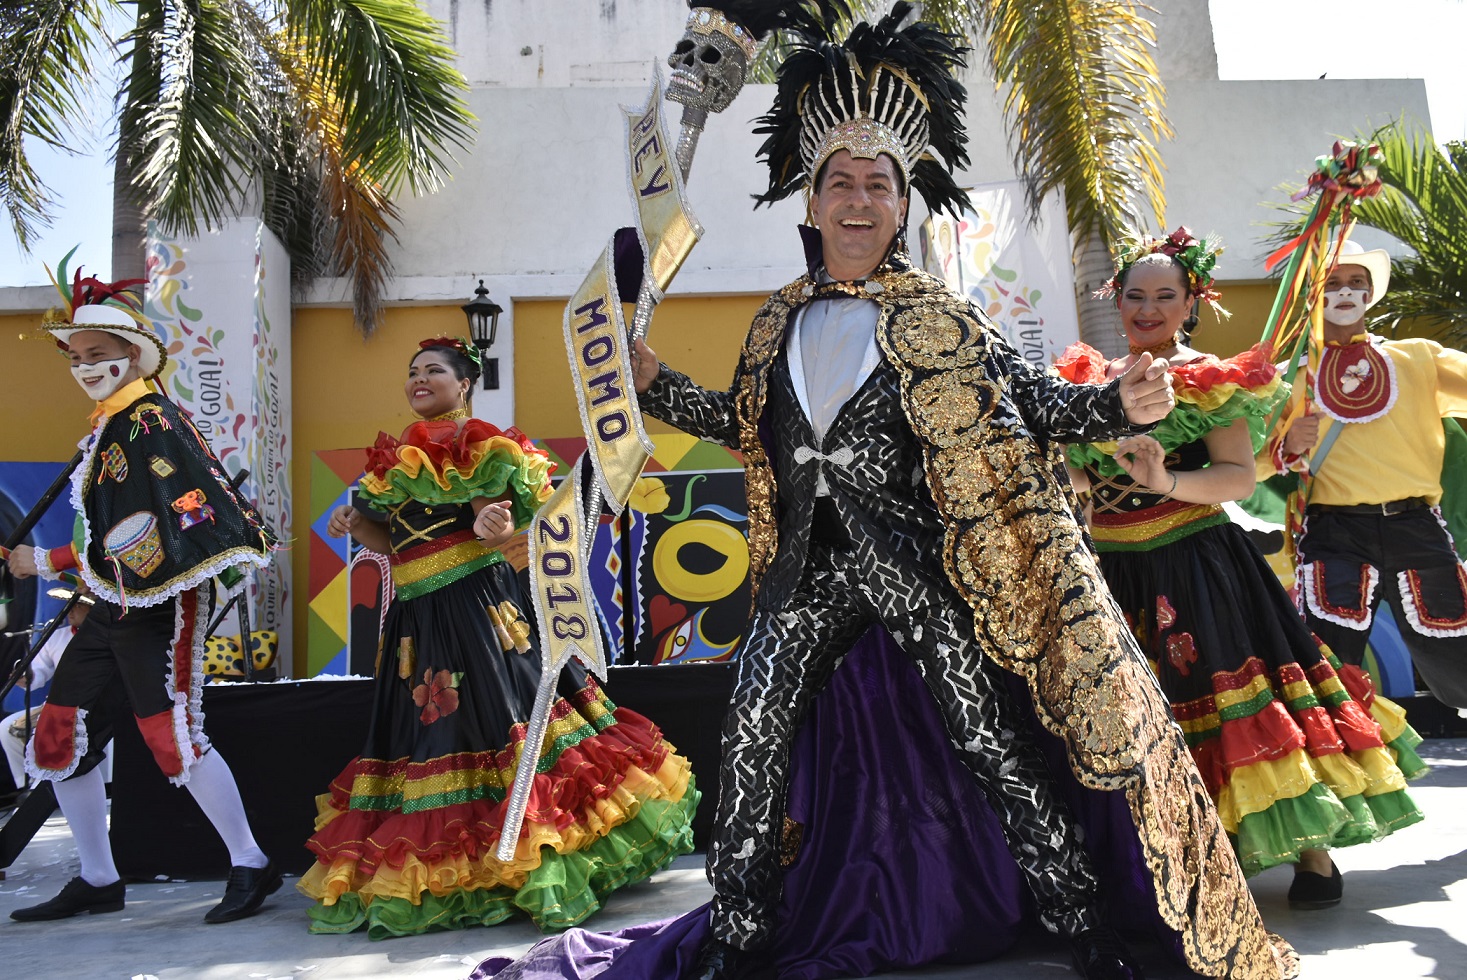 La Tradición reina este fin de semana en Barranquilla